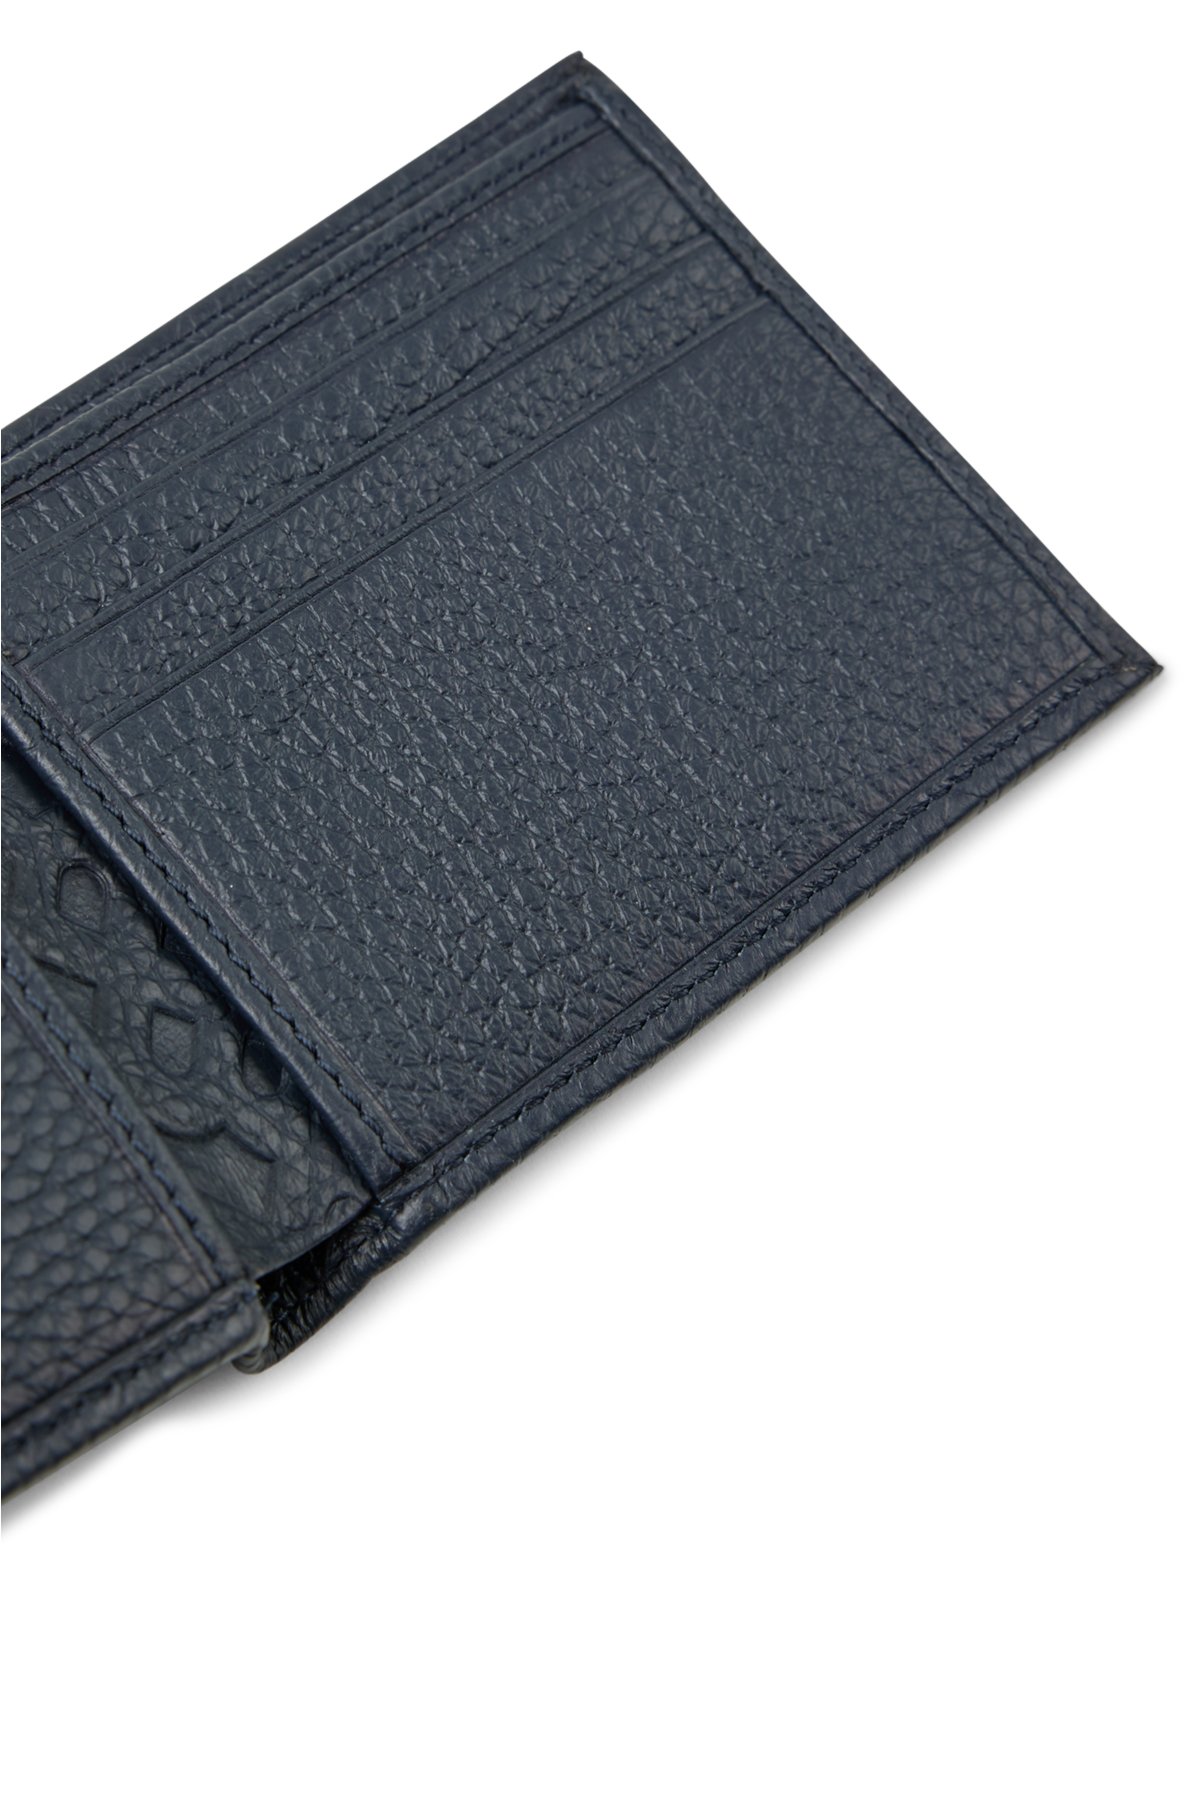 Gucci Monogram Embossed Wallet in Black for Men